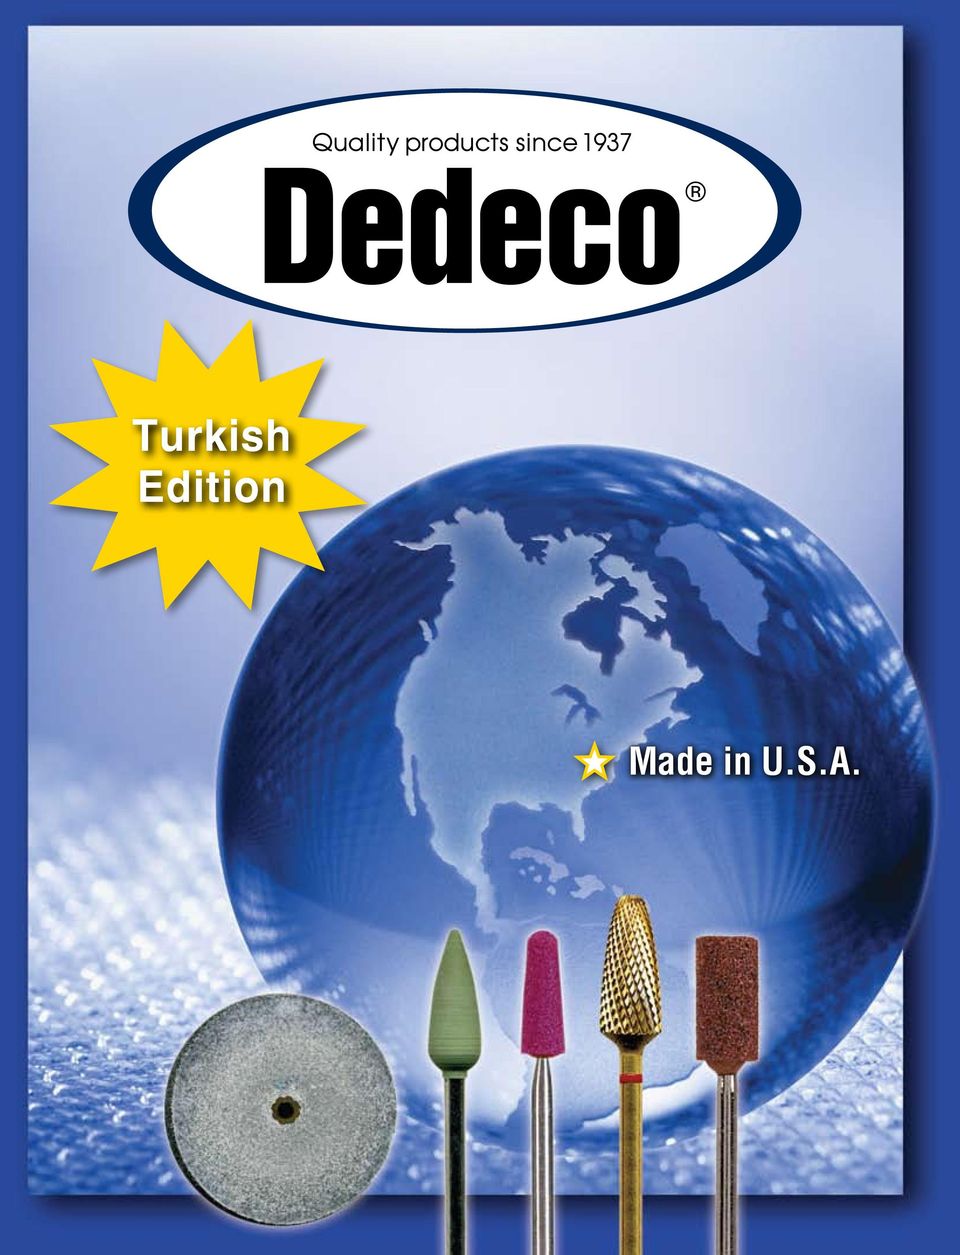 A. service@dedeco.